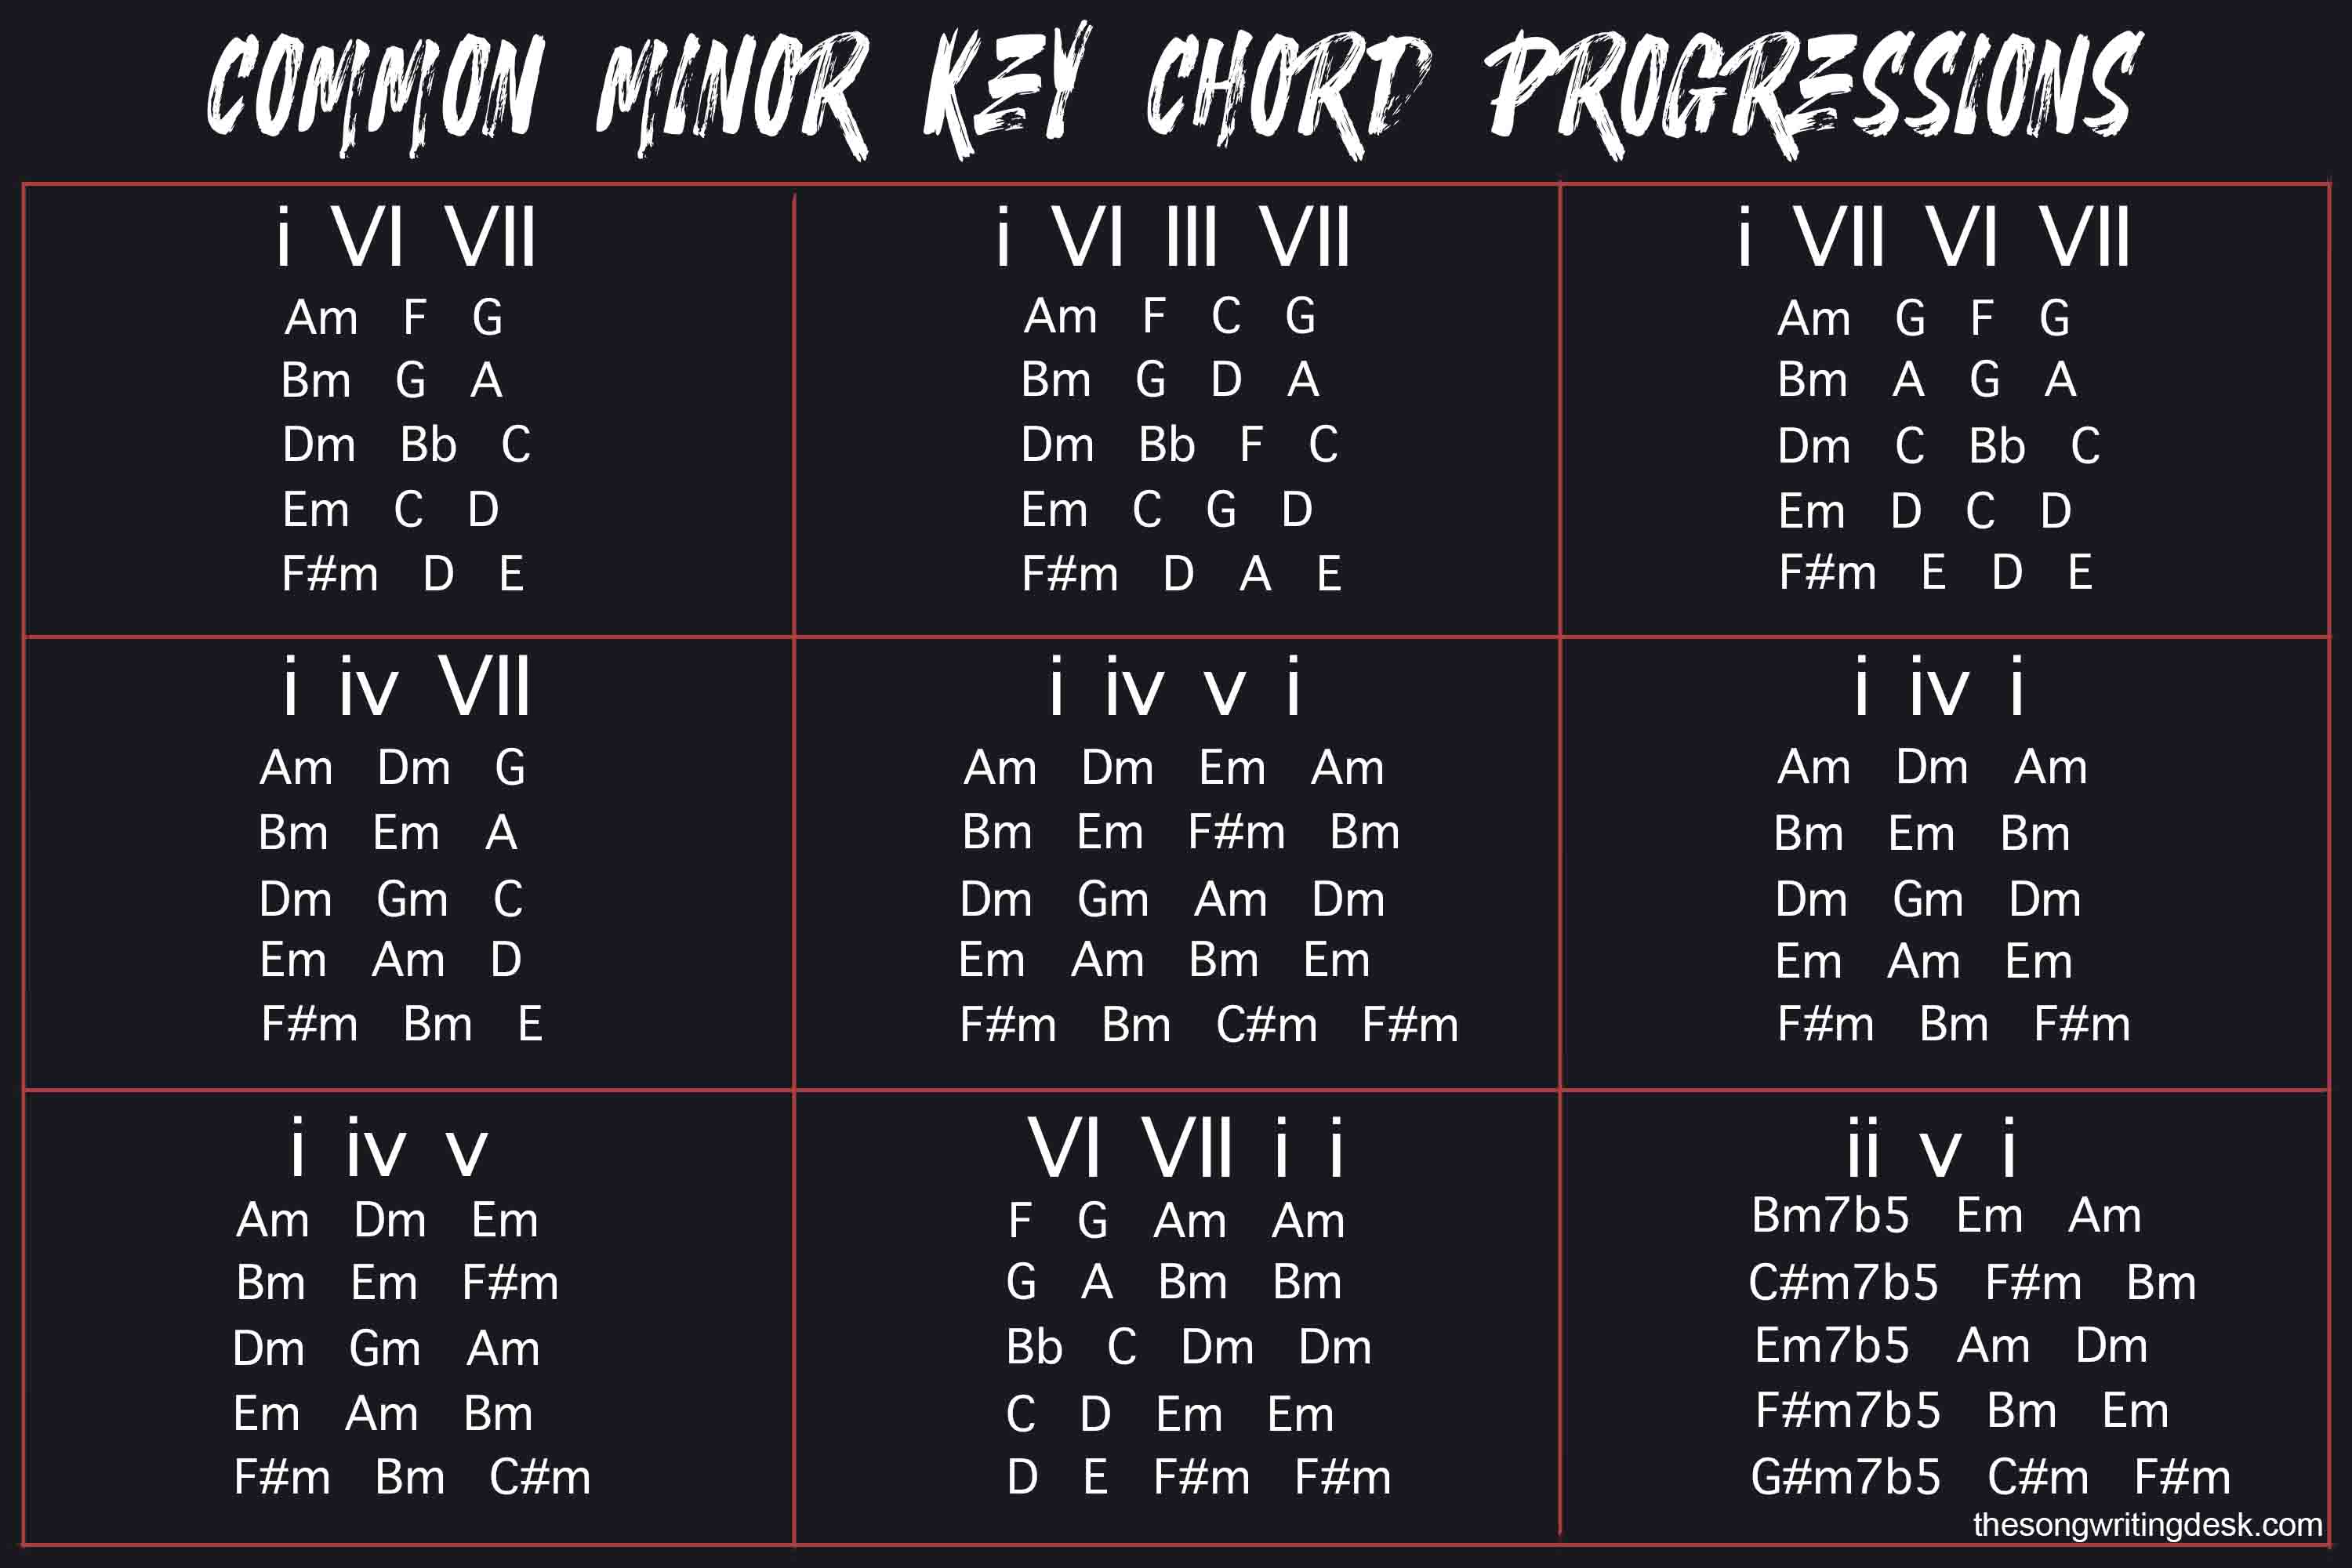 guitar chords progressions pdf